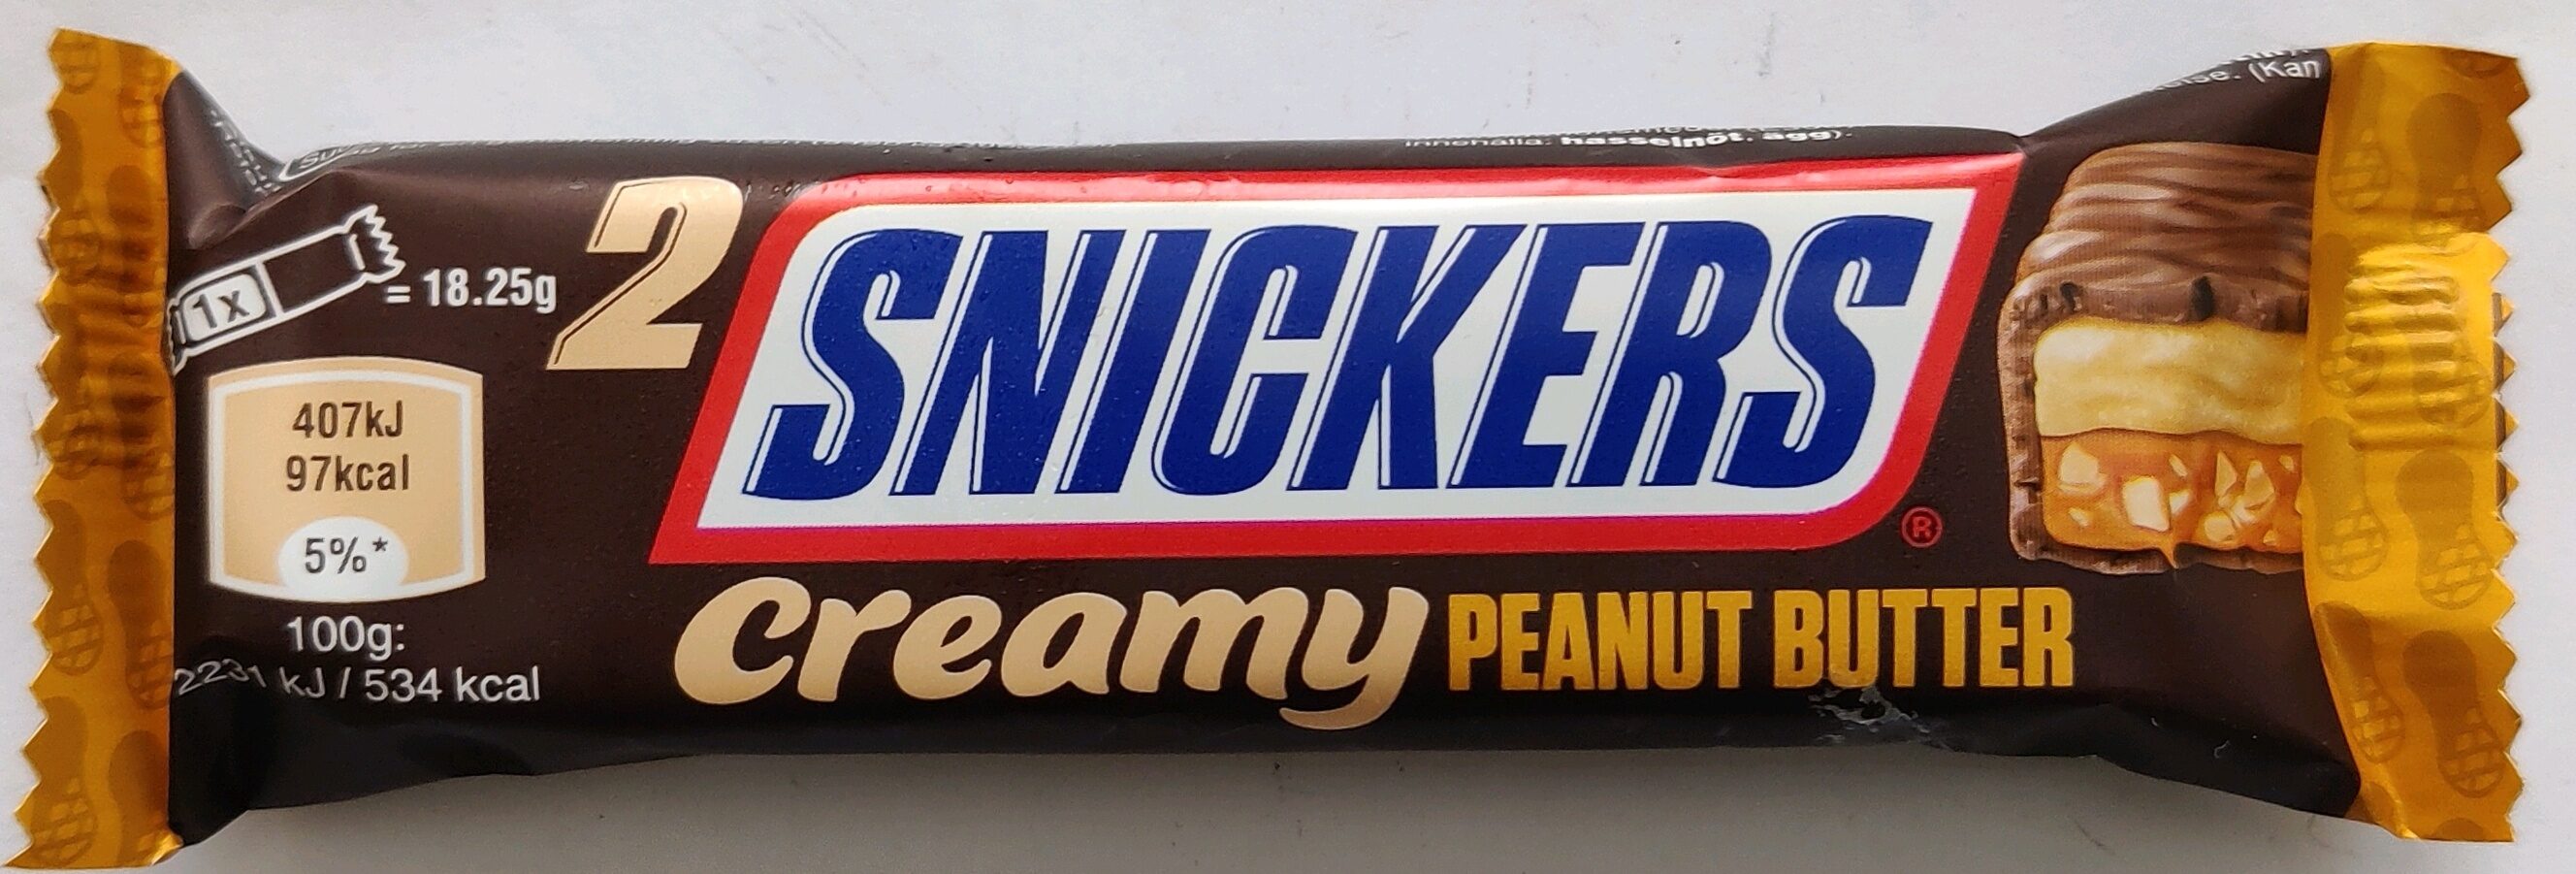 2 Snickers creamy peanut Butter - Produkt